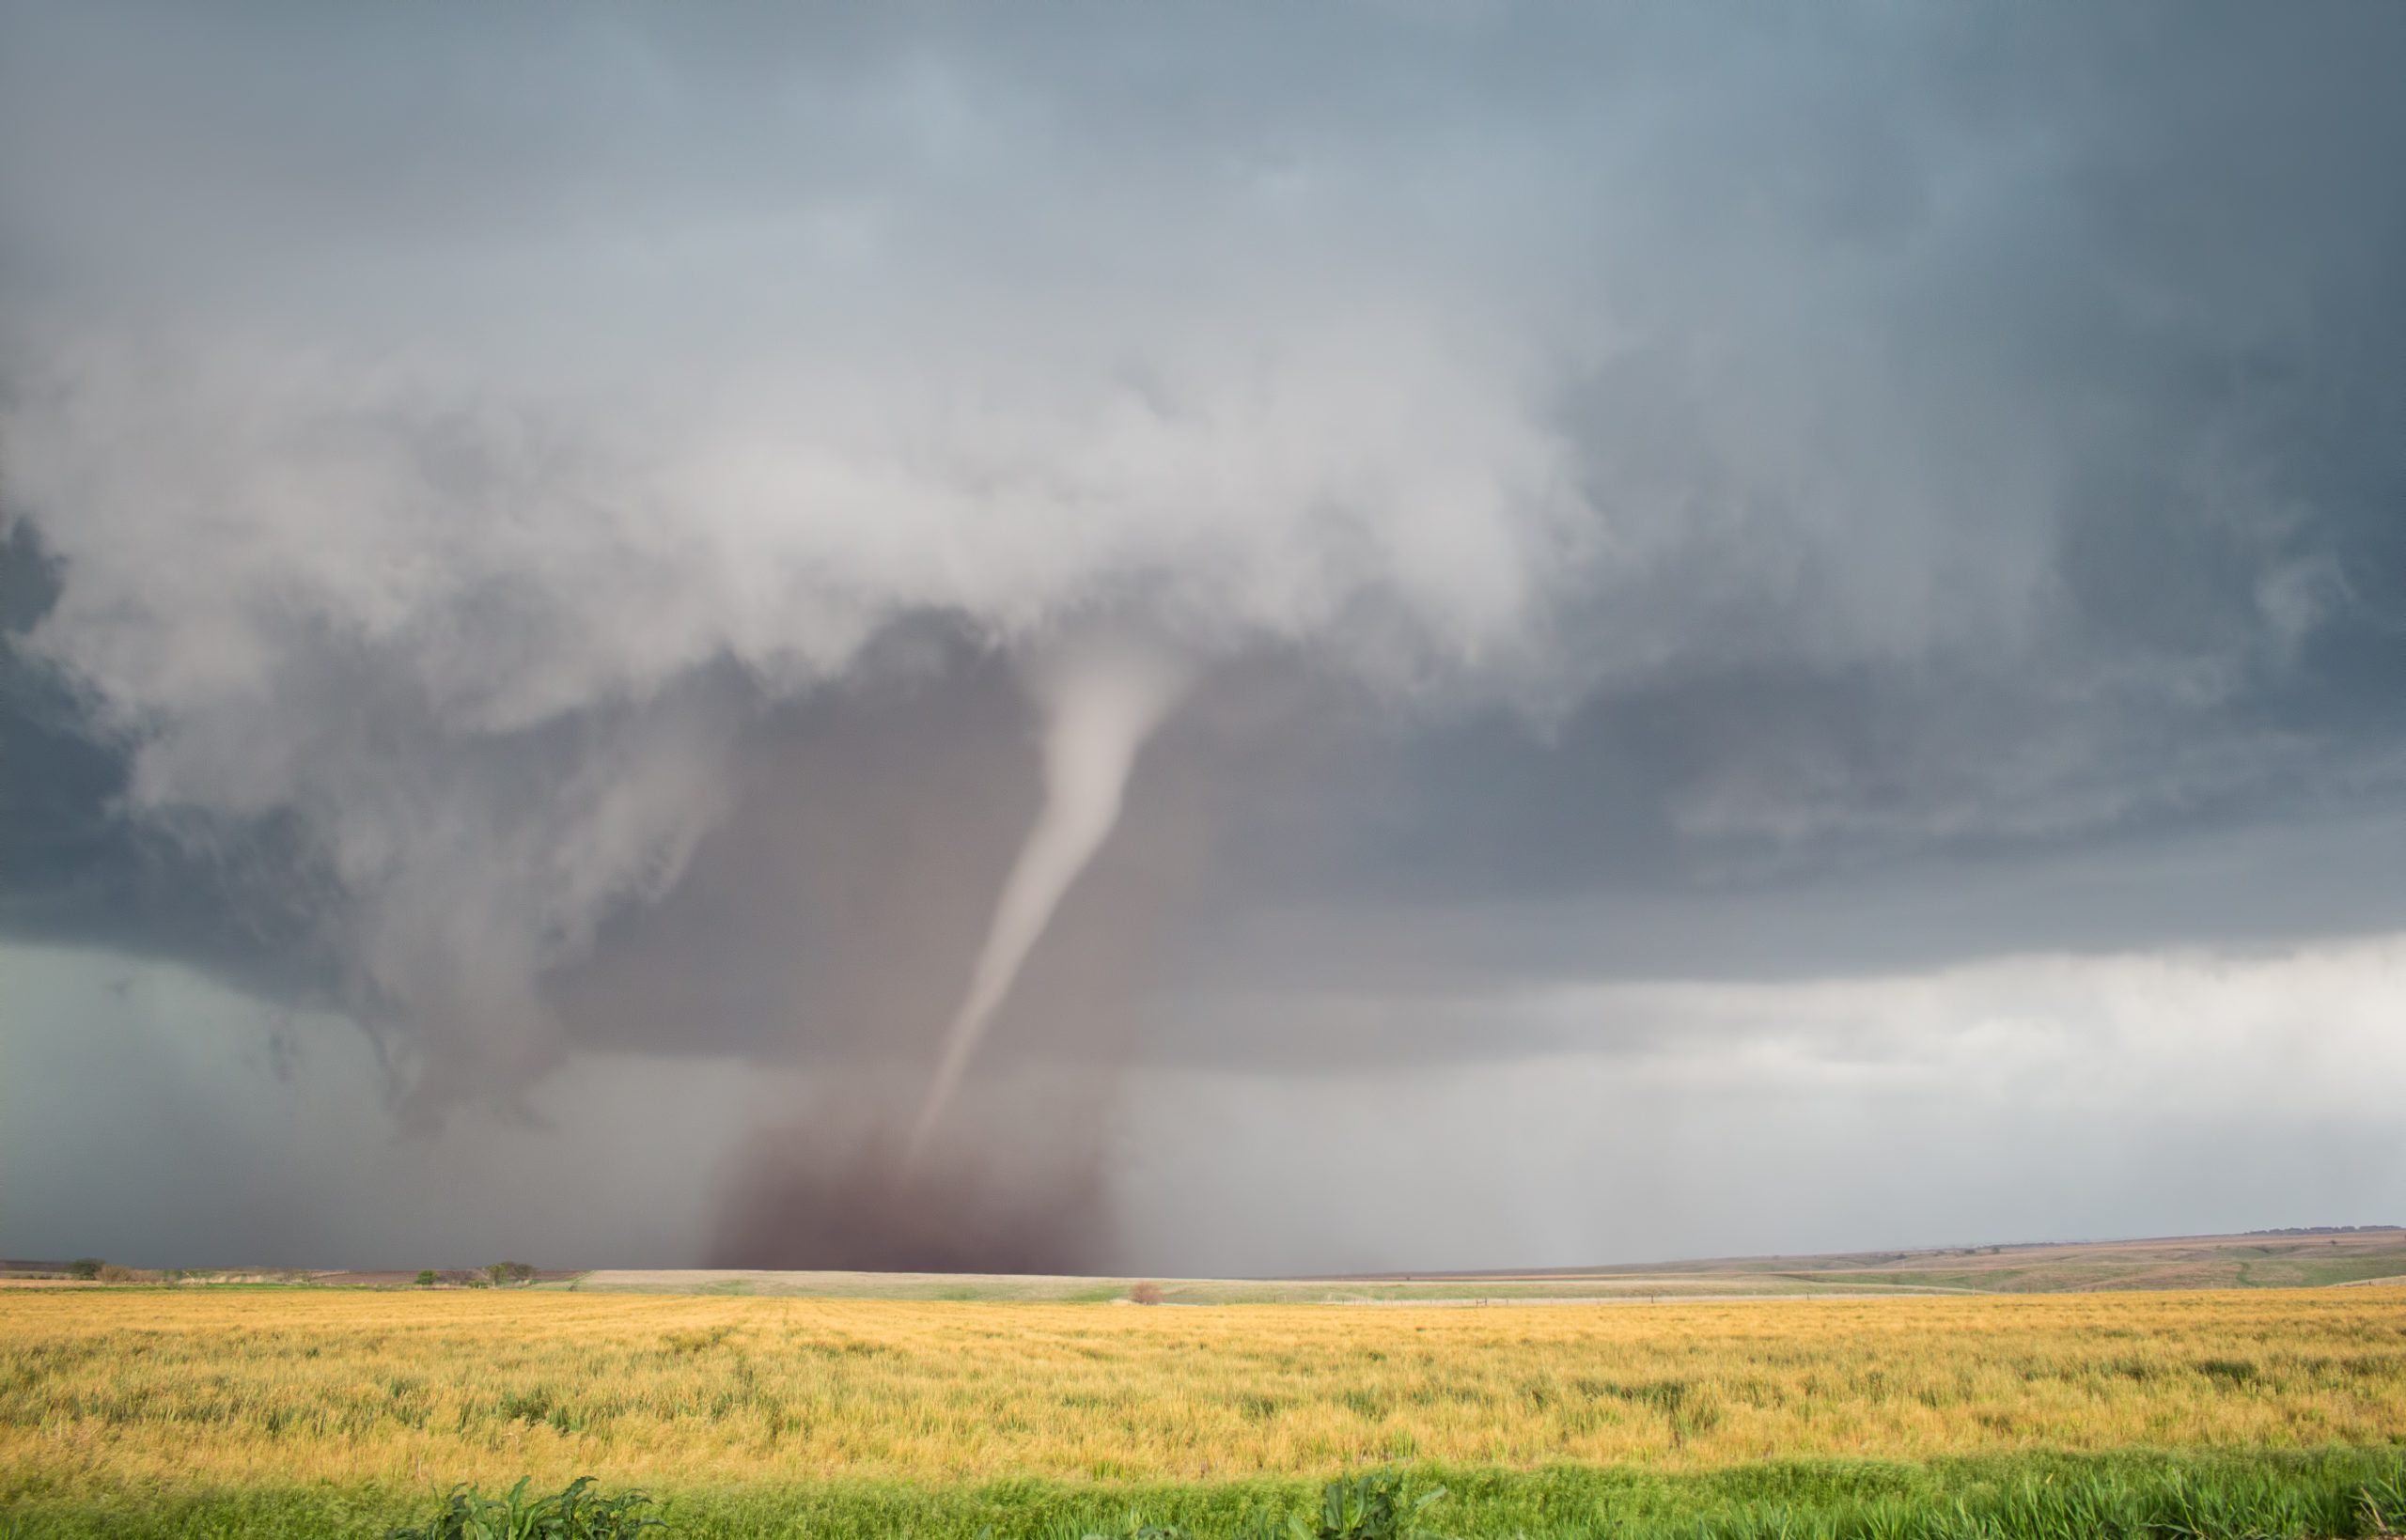 Tornado touching ground in a field